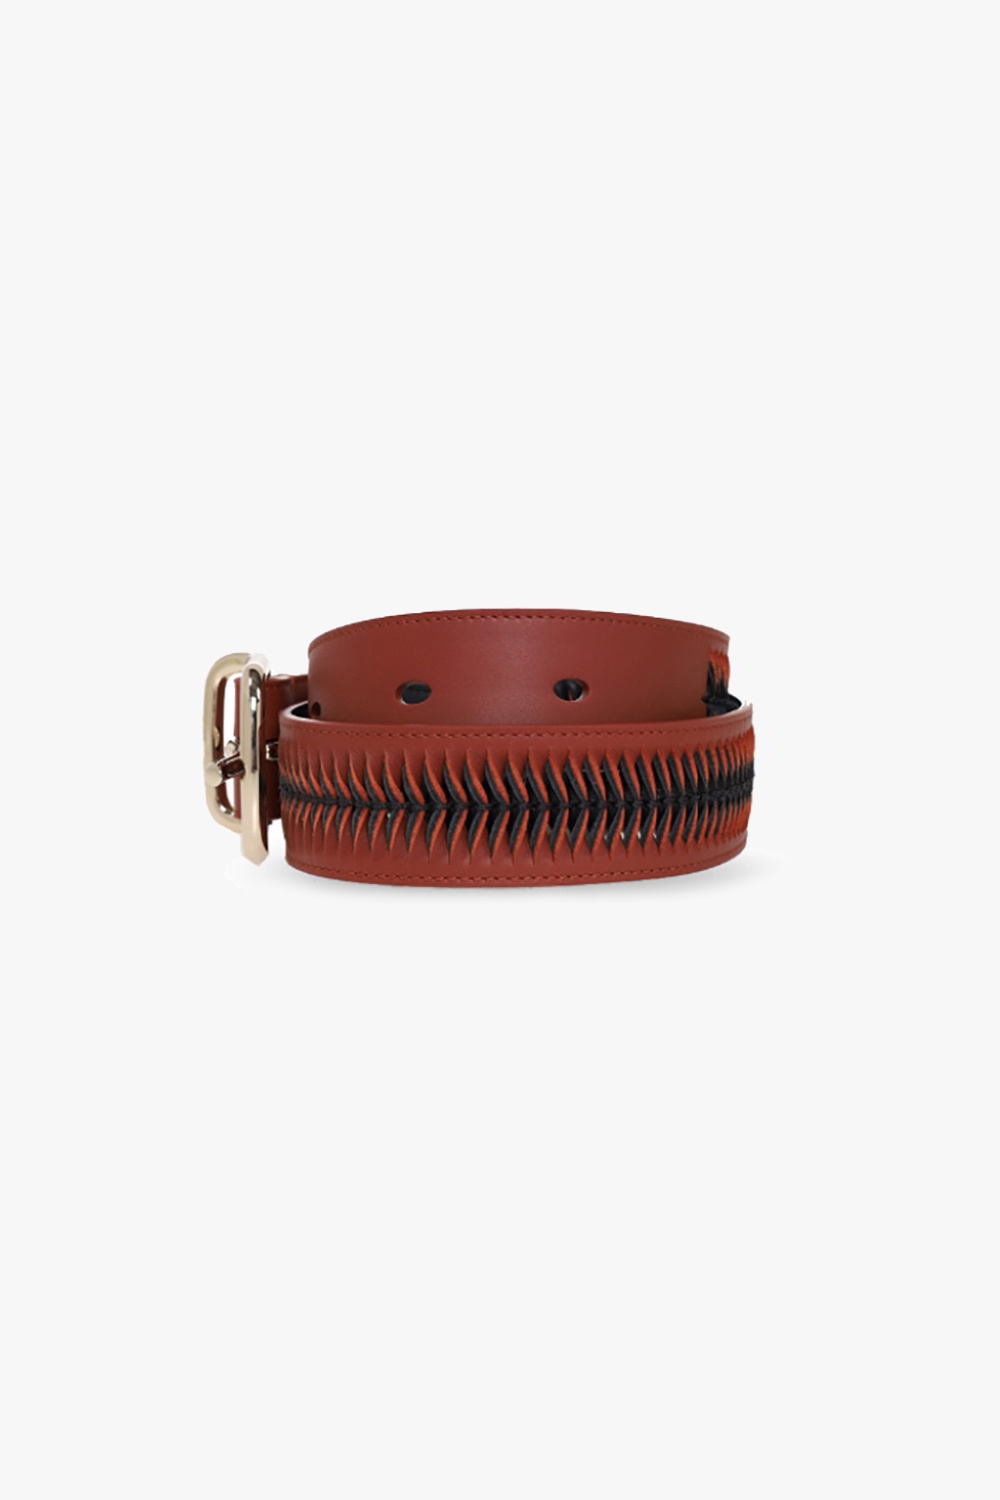 Chloé ‘Louela’ leather belt